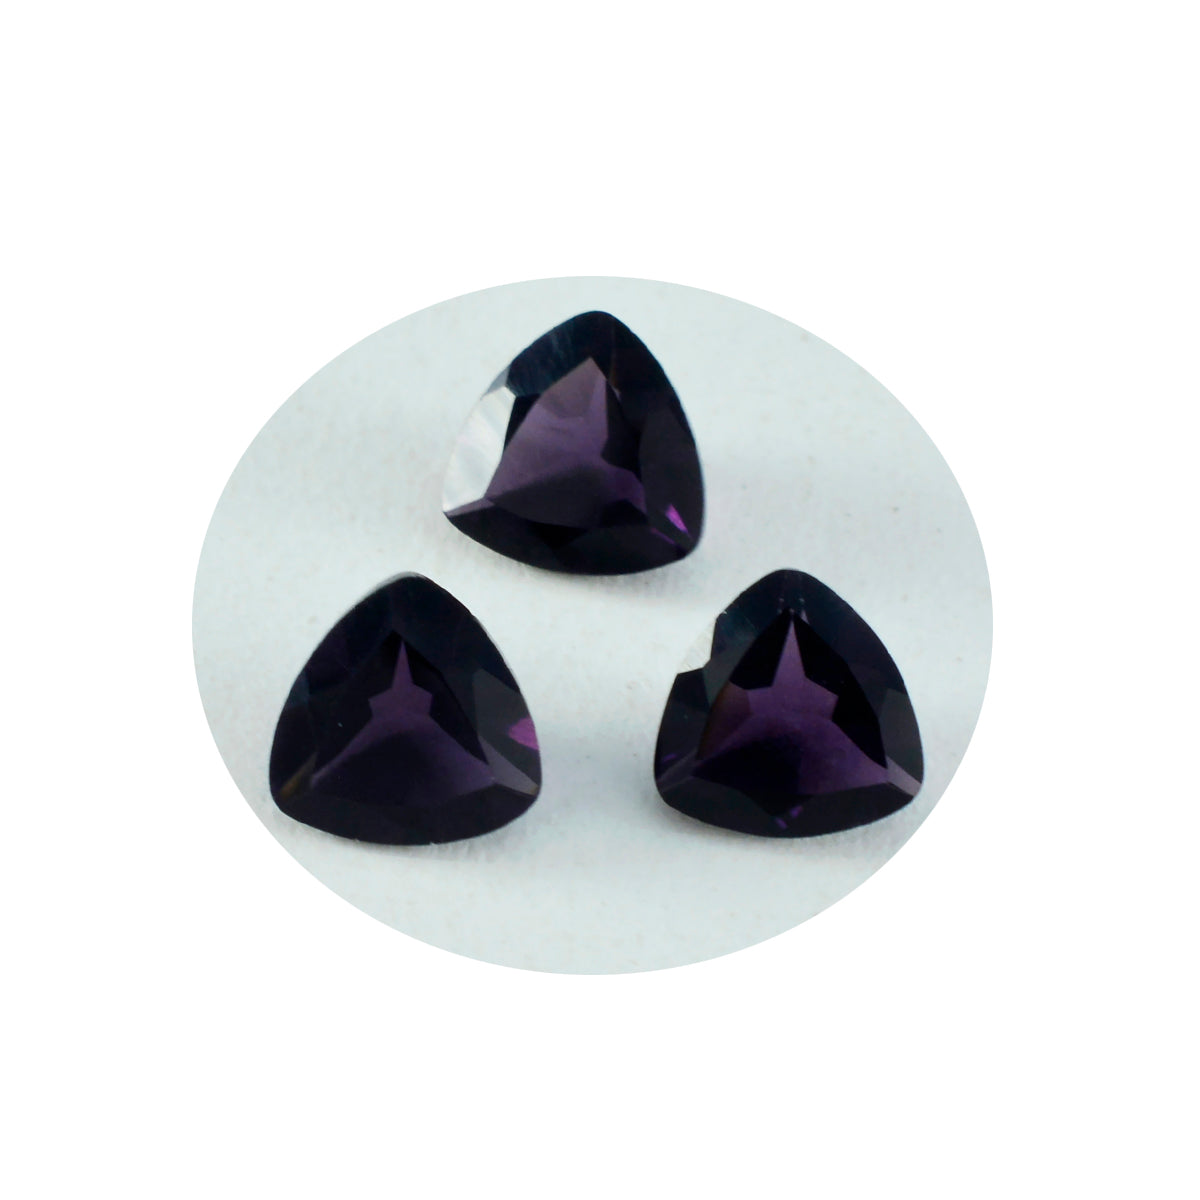 Riyogems 1PC Purple Amethyst CZ Faceted 15x15 mm Trillion Shape pretty Quality Loose Stone